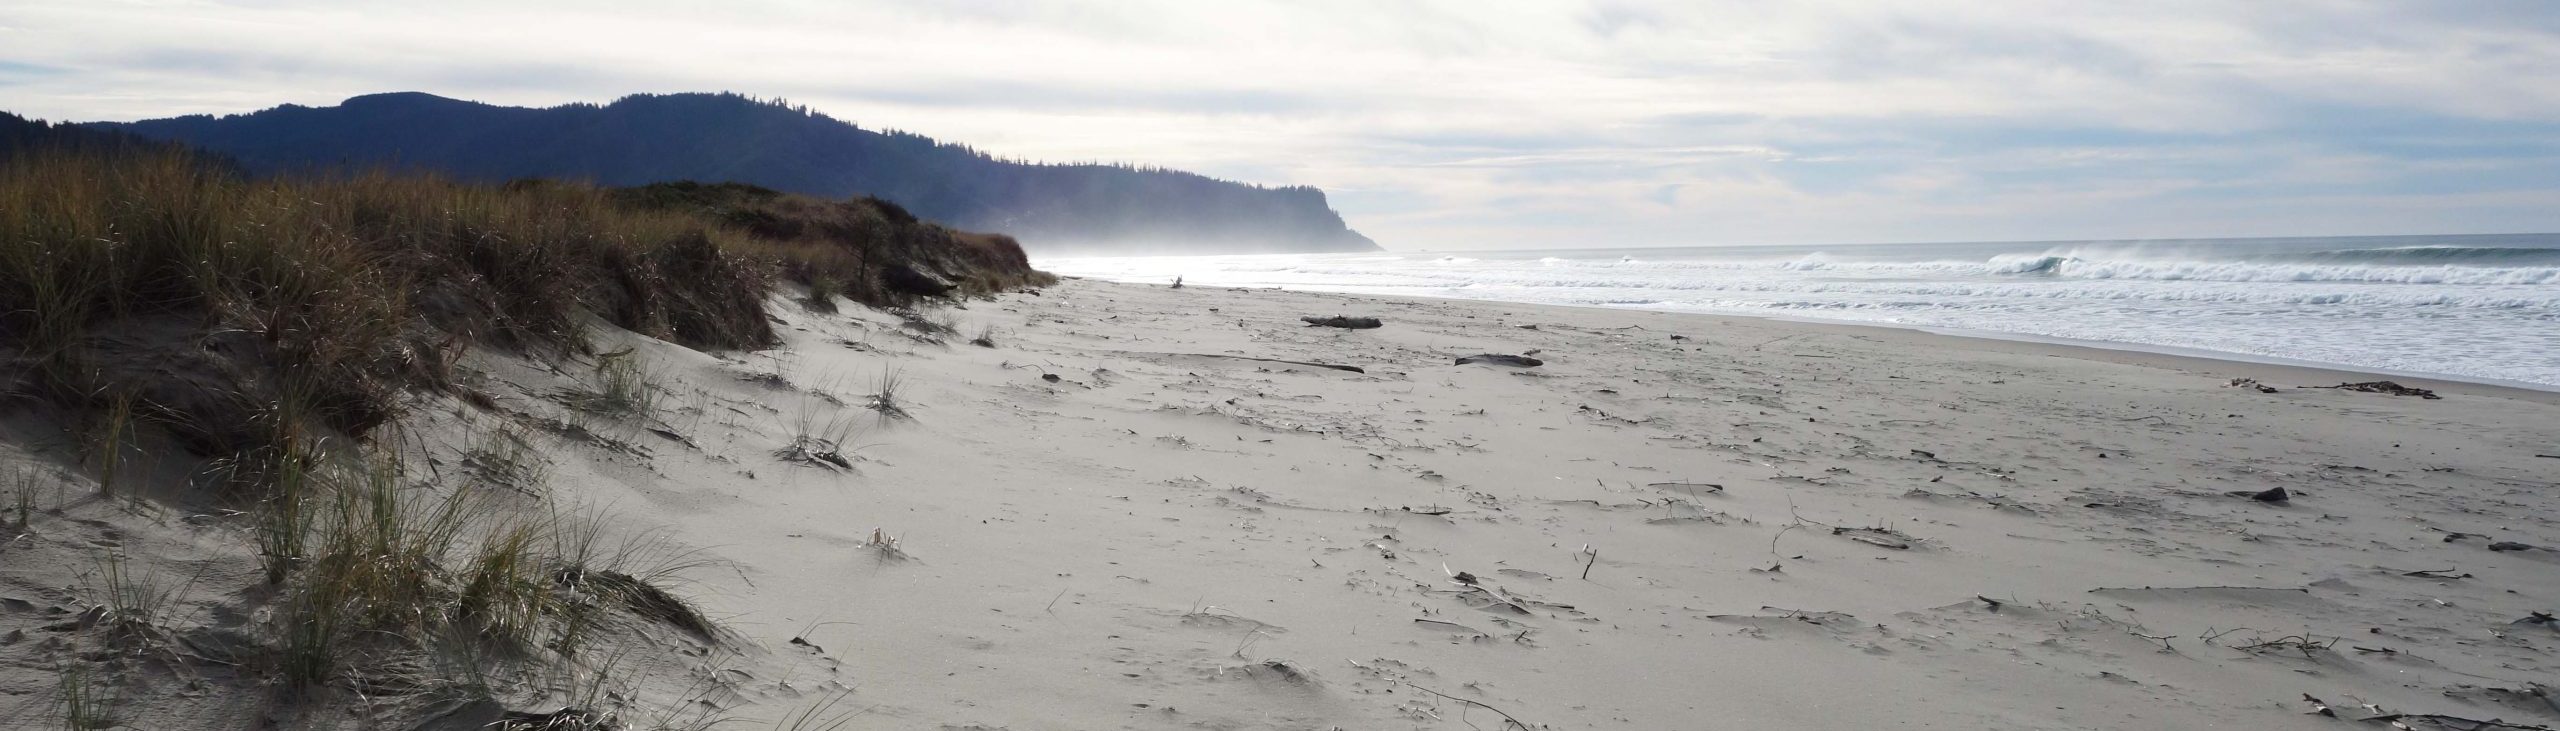 Private Beach Access on the Oregon Coast